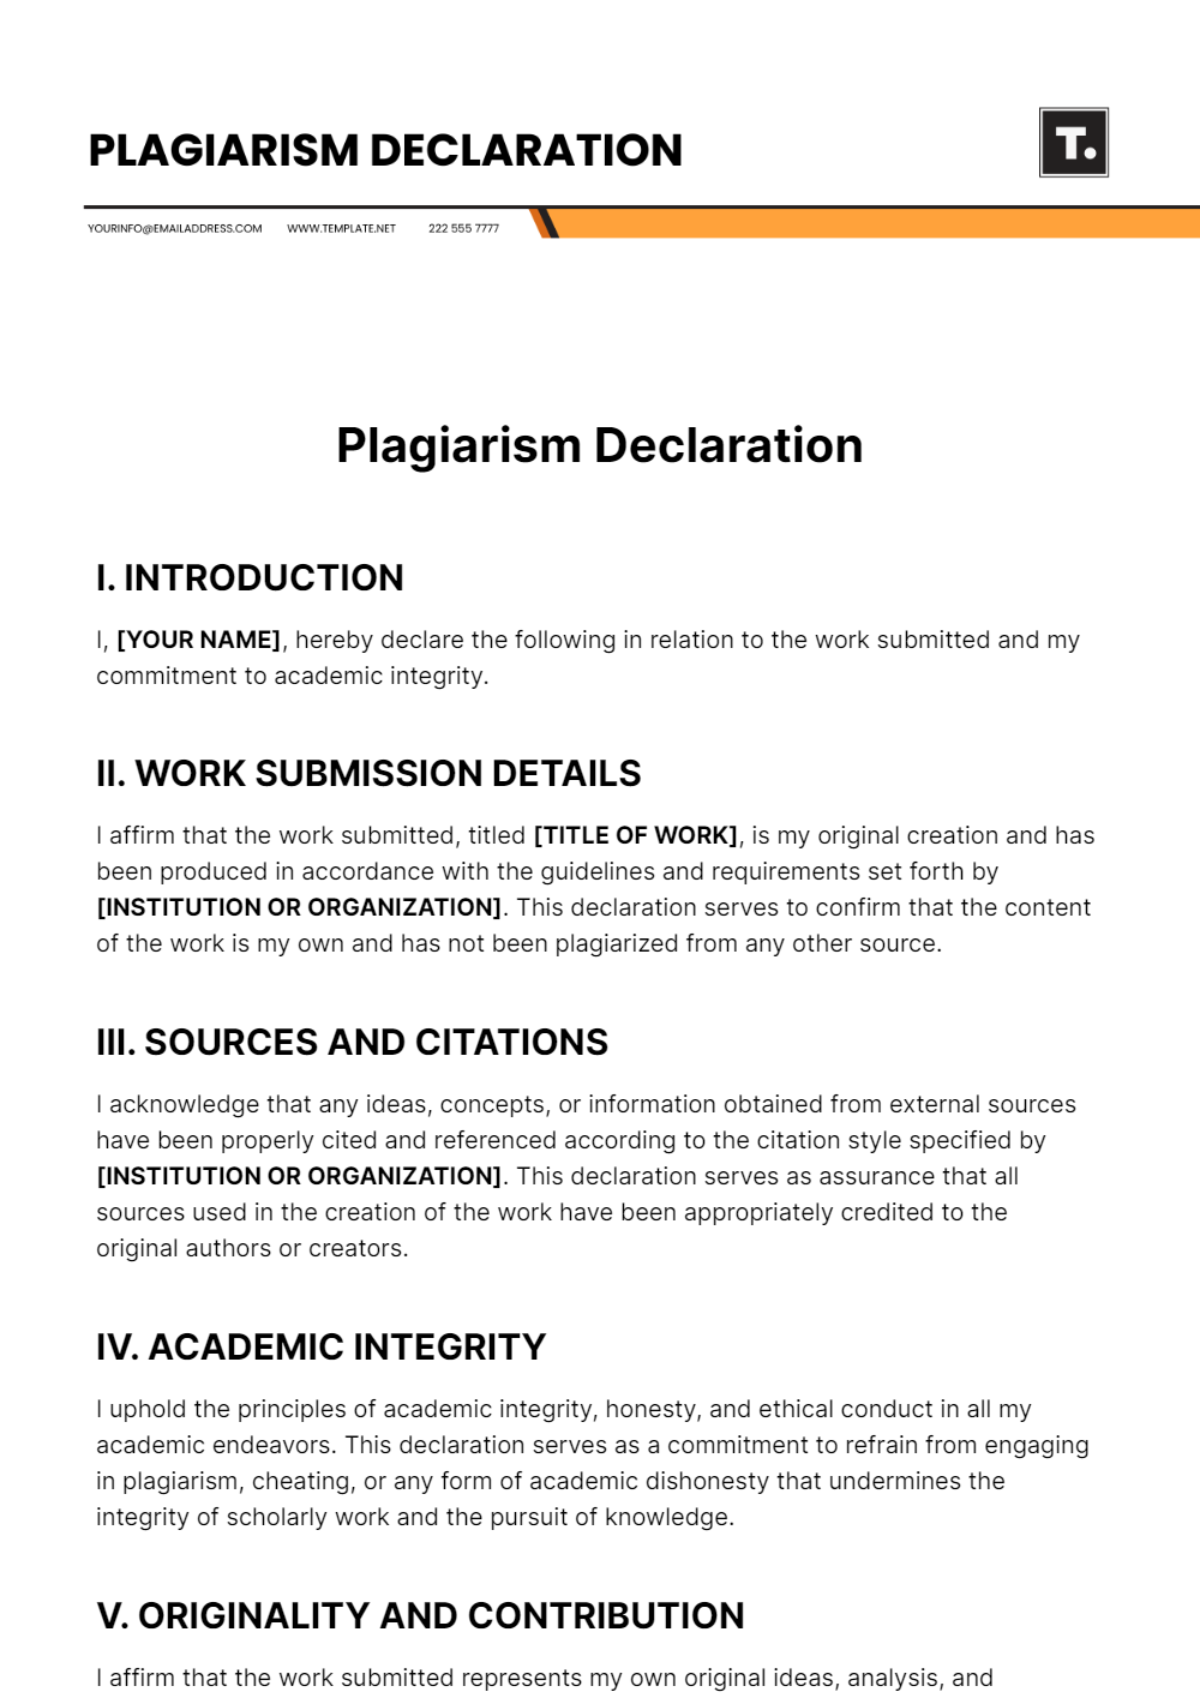 Plagiarism Declaration Template